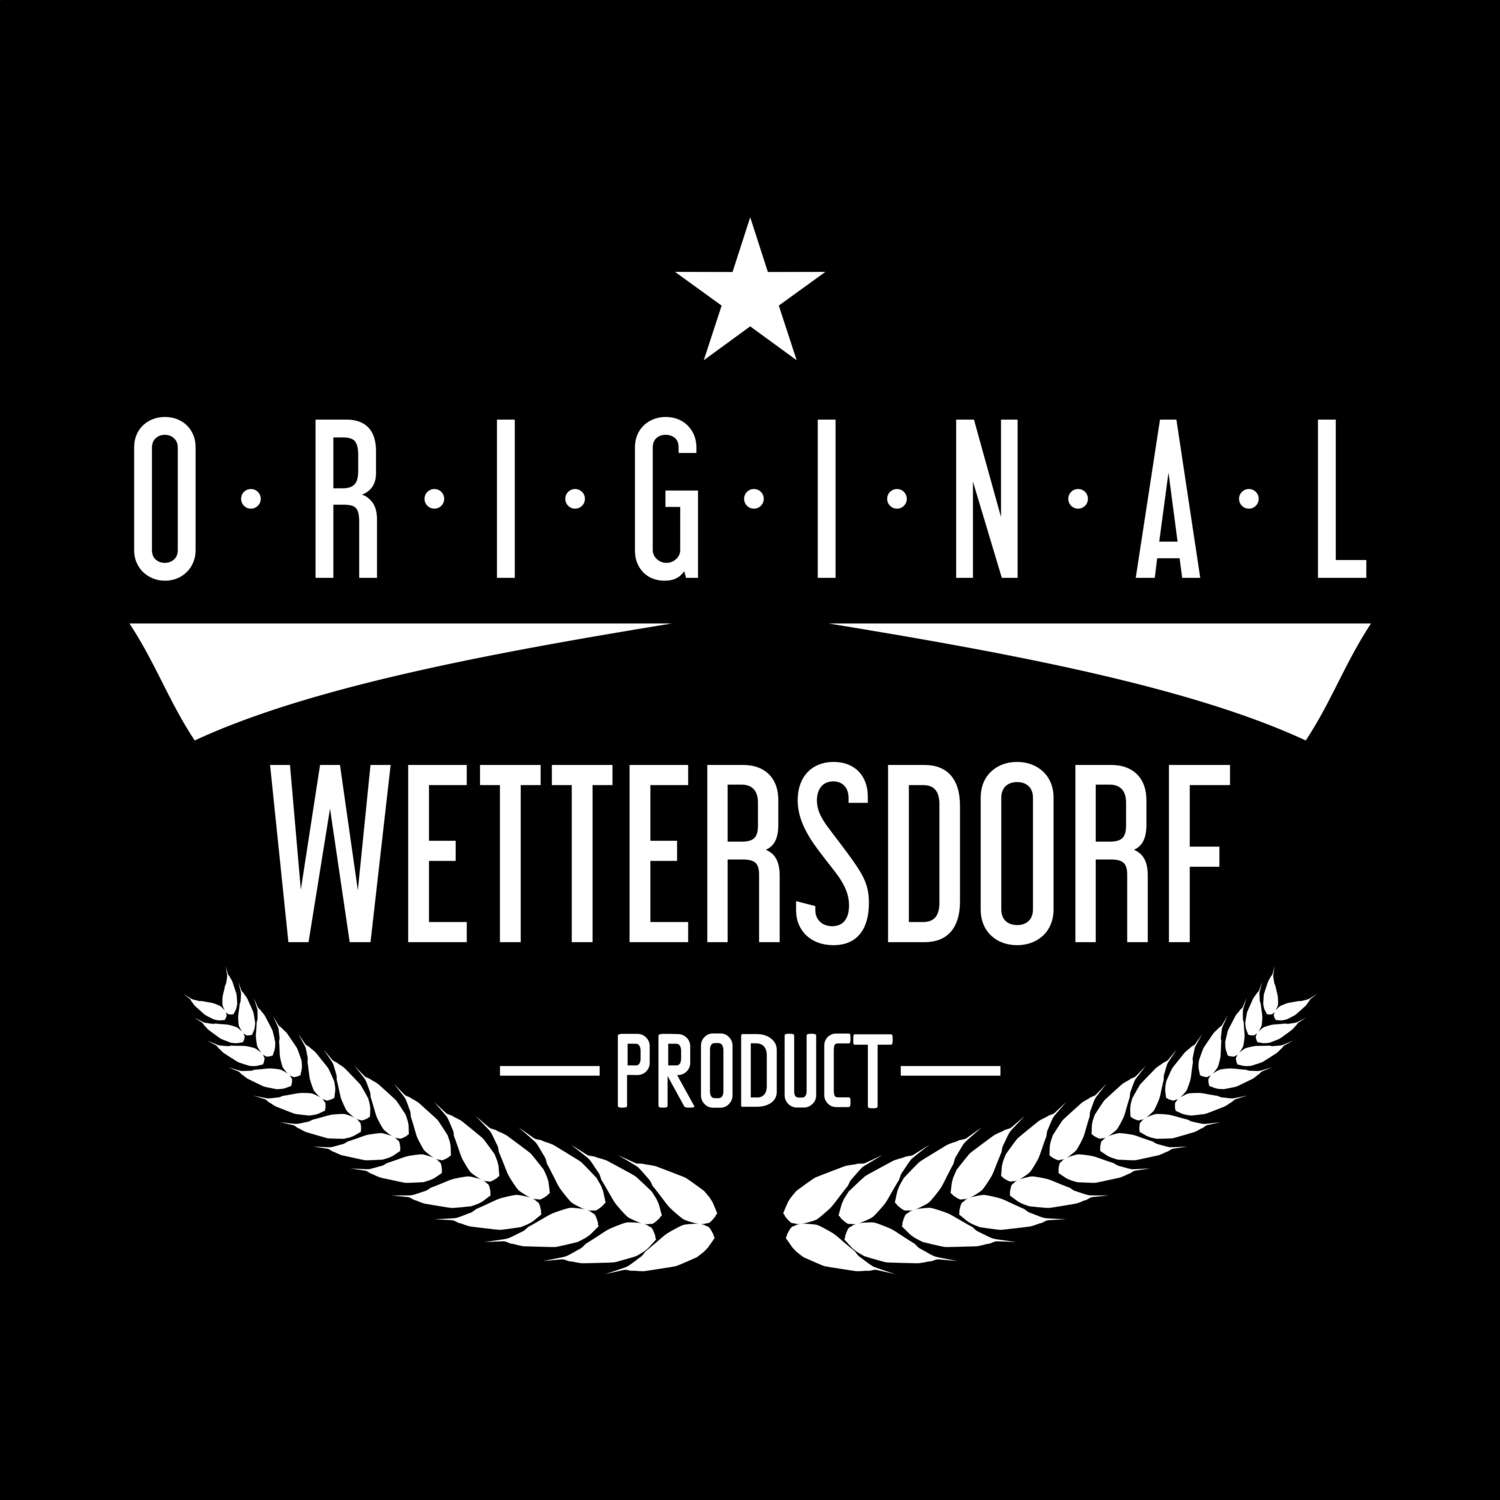 Wettersdorf T-Shirt »Original Product«